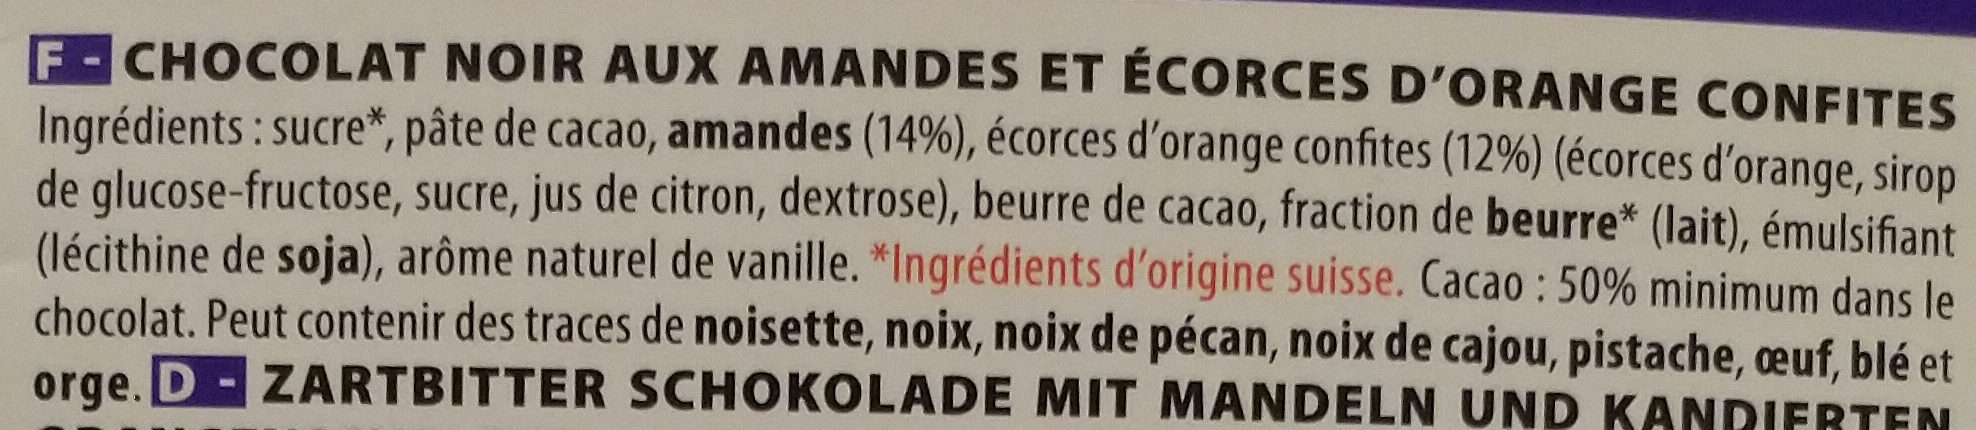 Chocolat noir amandes & orange - Ingredients - fr